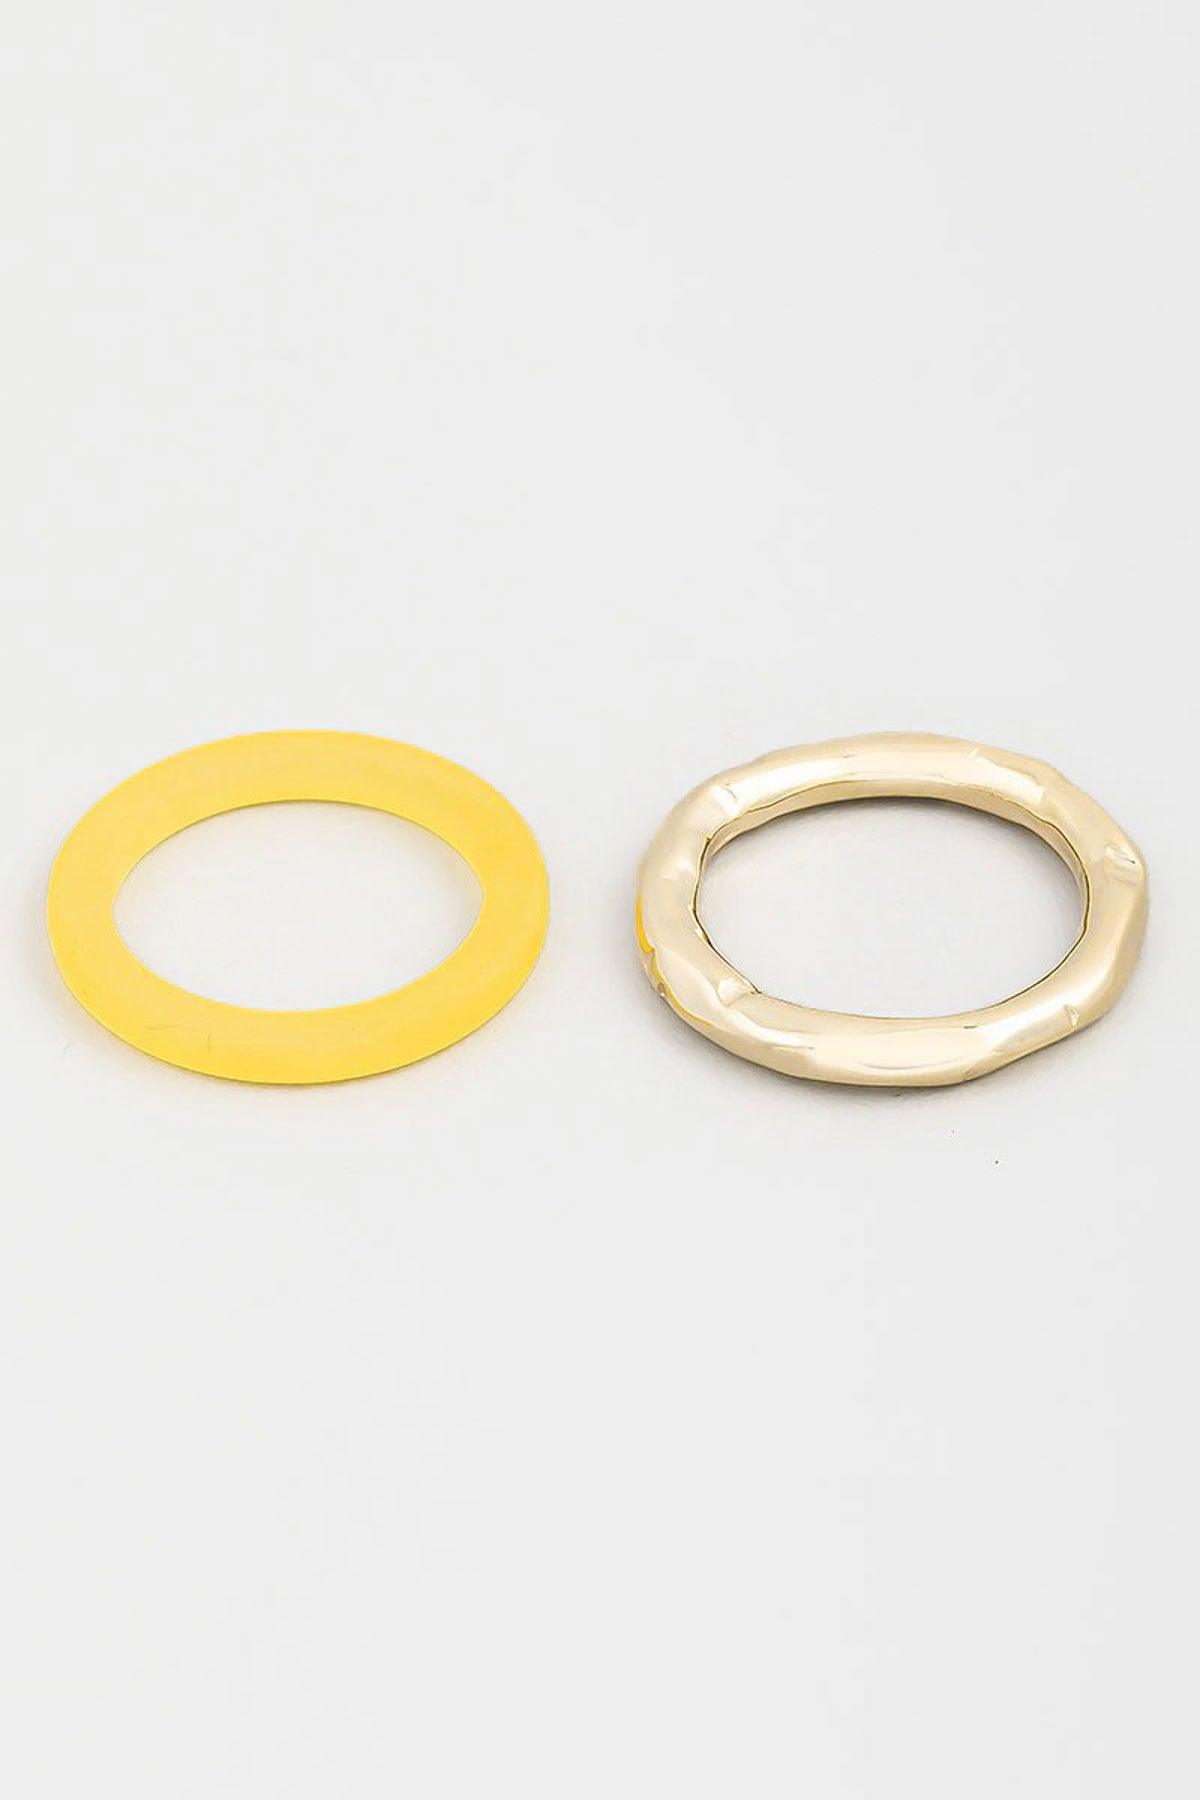 Vintage Style Metallic & Acrylic Resin Ring Set - Tasha Apparel Wholesale